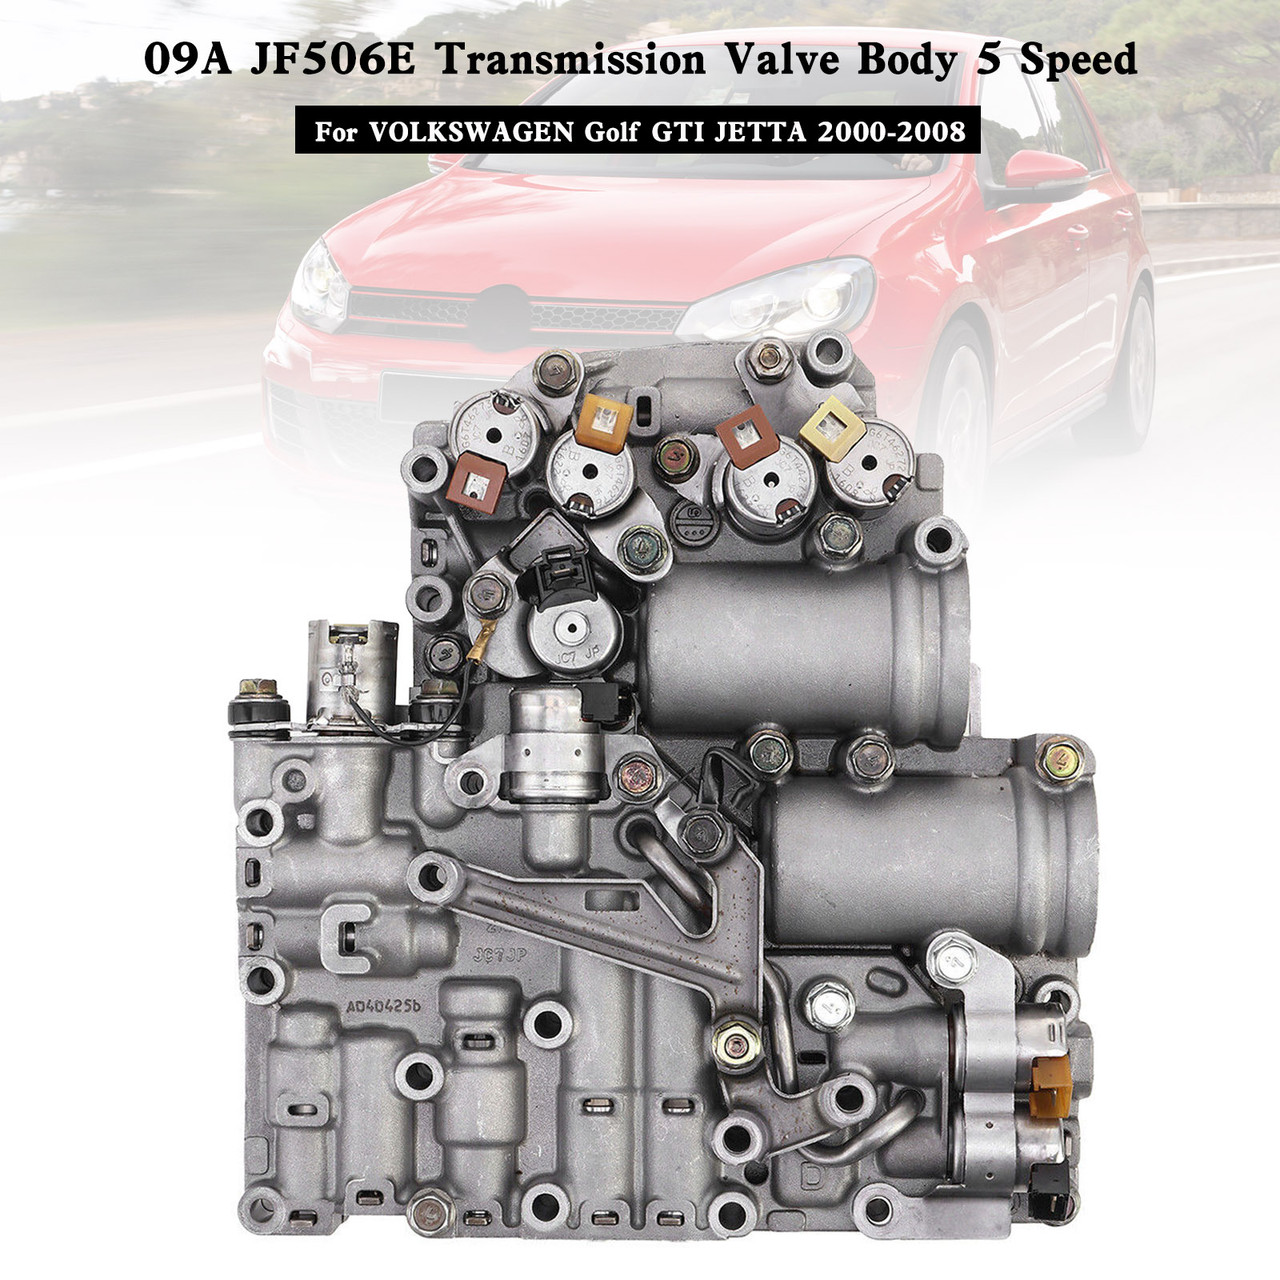 02-03 VOLKSWAGEN JETTA  L4 1.8L V6 2.8L 09A JF506E Transmission Valve Body 5 Speed